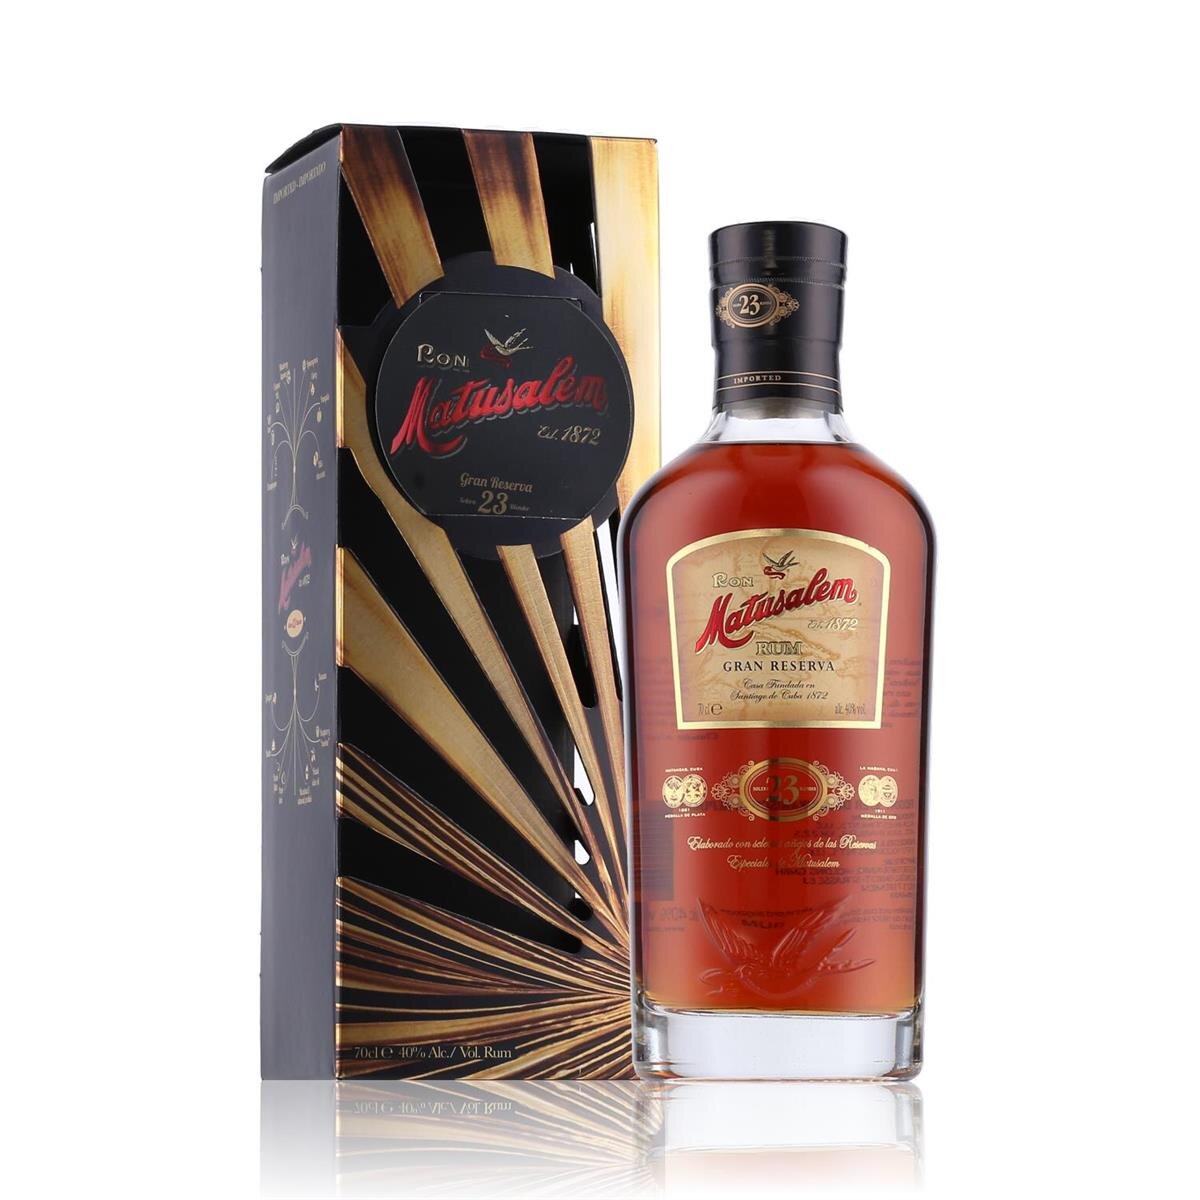 Metusalem Solera 23 Blender Gran Reserva Rum 40% Vol. 0,7l in Geschen